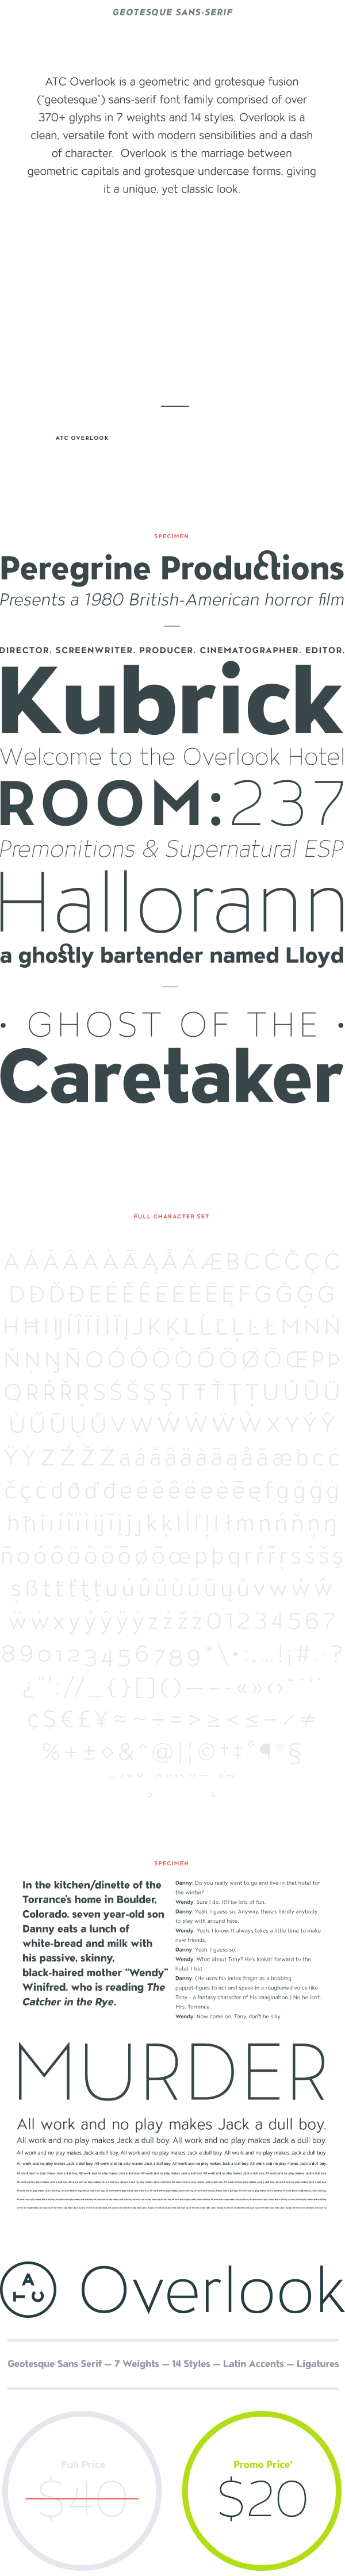 type font alex sheyn avondale type co atc chicago Typeface family sans-serif Overlook foundry grotesque geotesque geometric